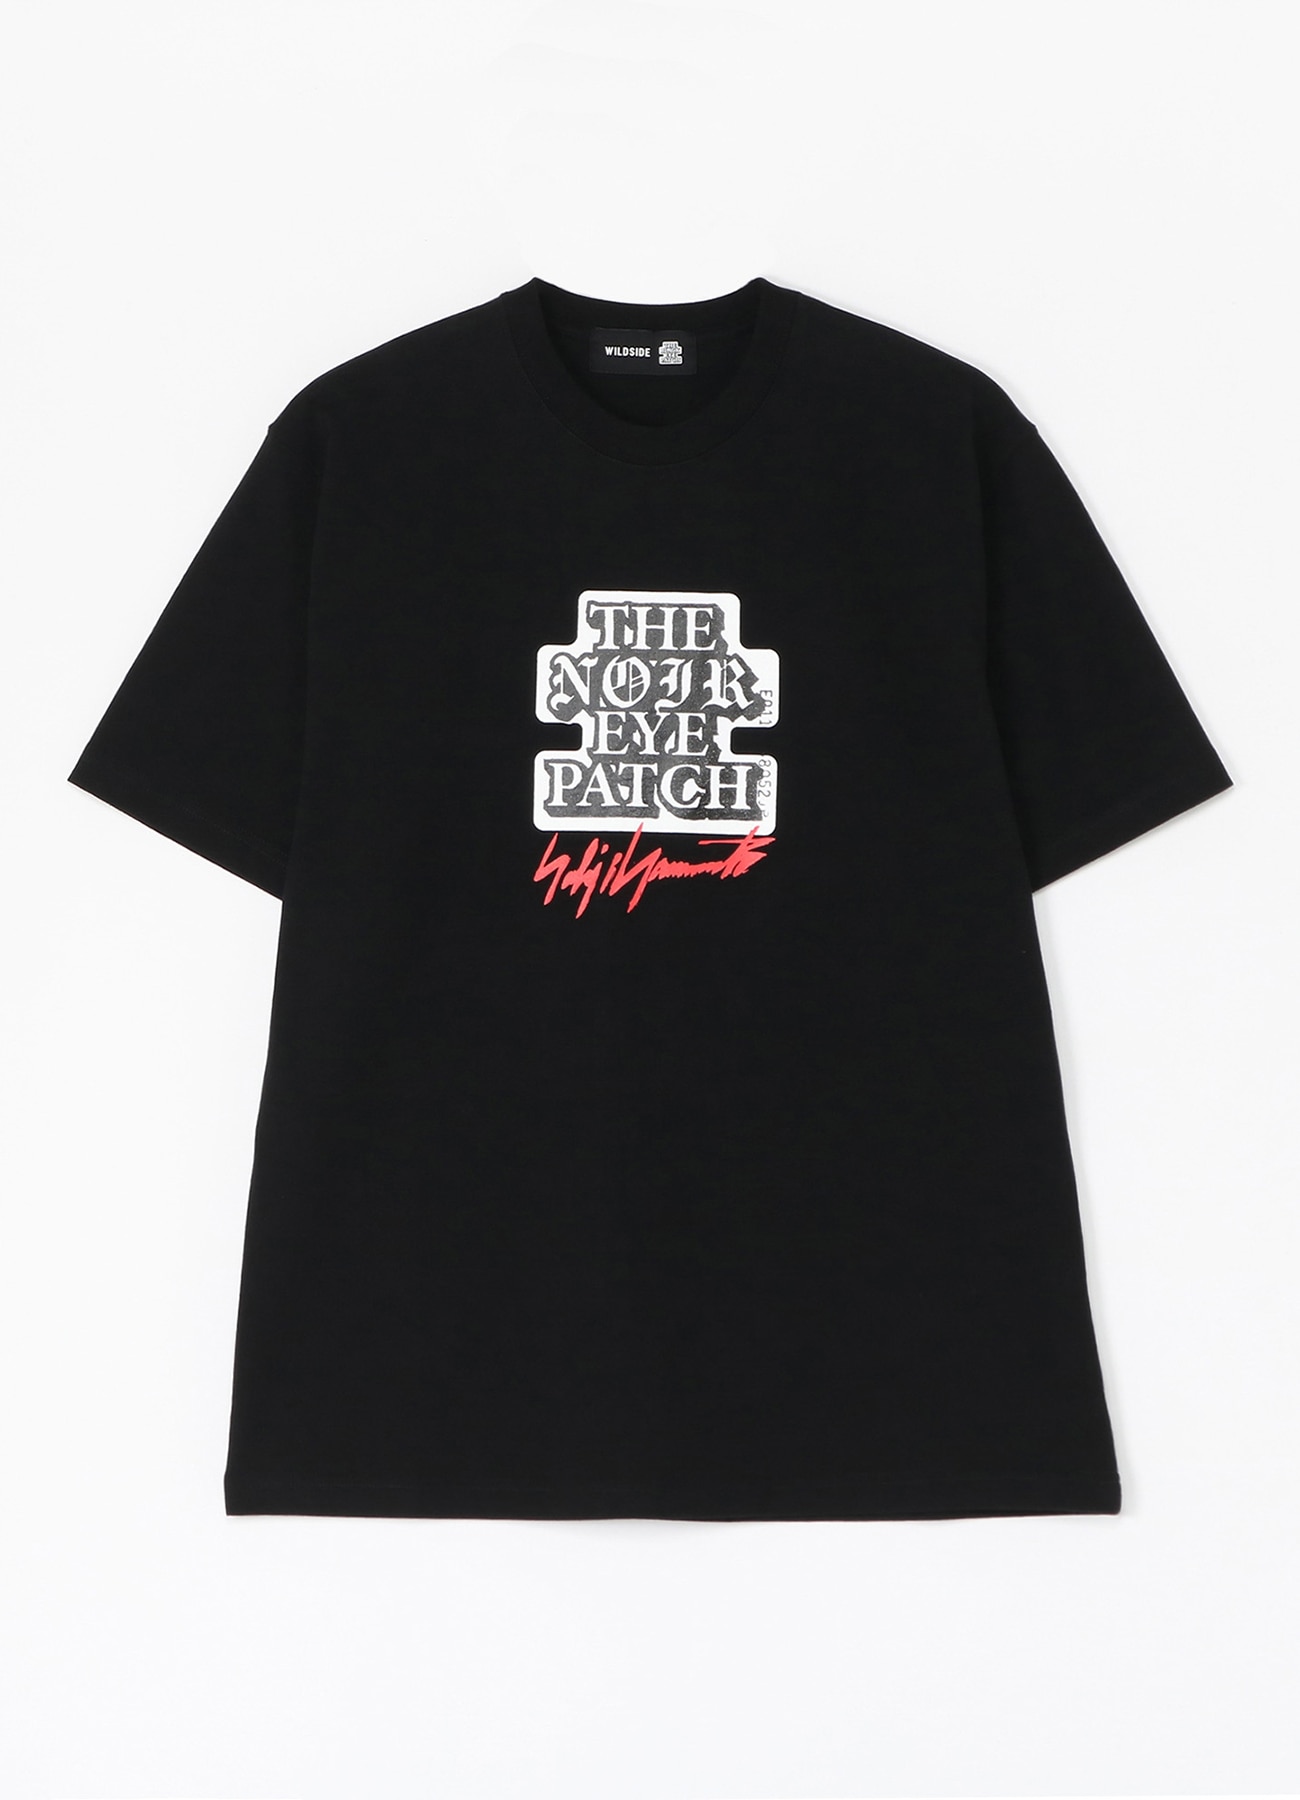 WILDSIDE × BlackEye Patch NOIR EYE PATCH Short Sleeve T-shirt